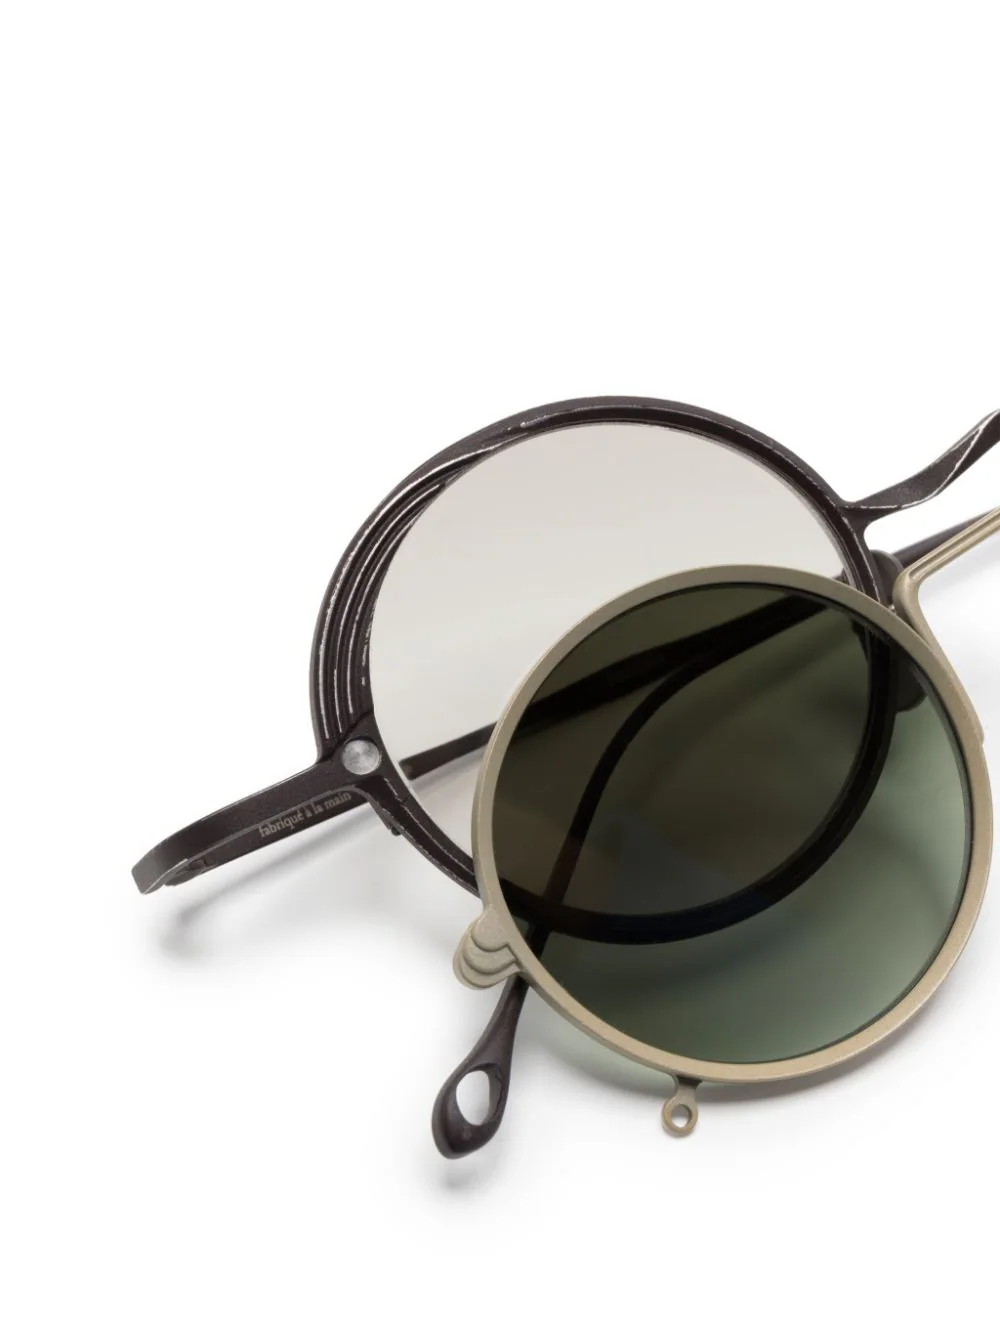 RIGARDS X ZIGGY CHEN Pure Titanium Clip-on Sunglasses Vintage 